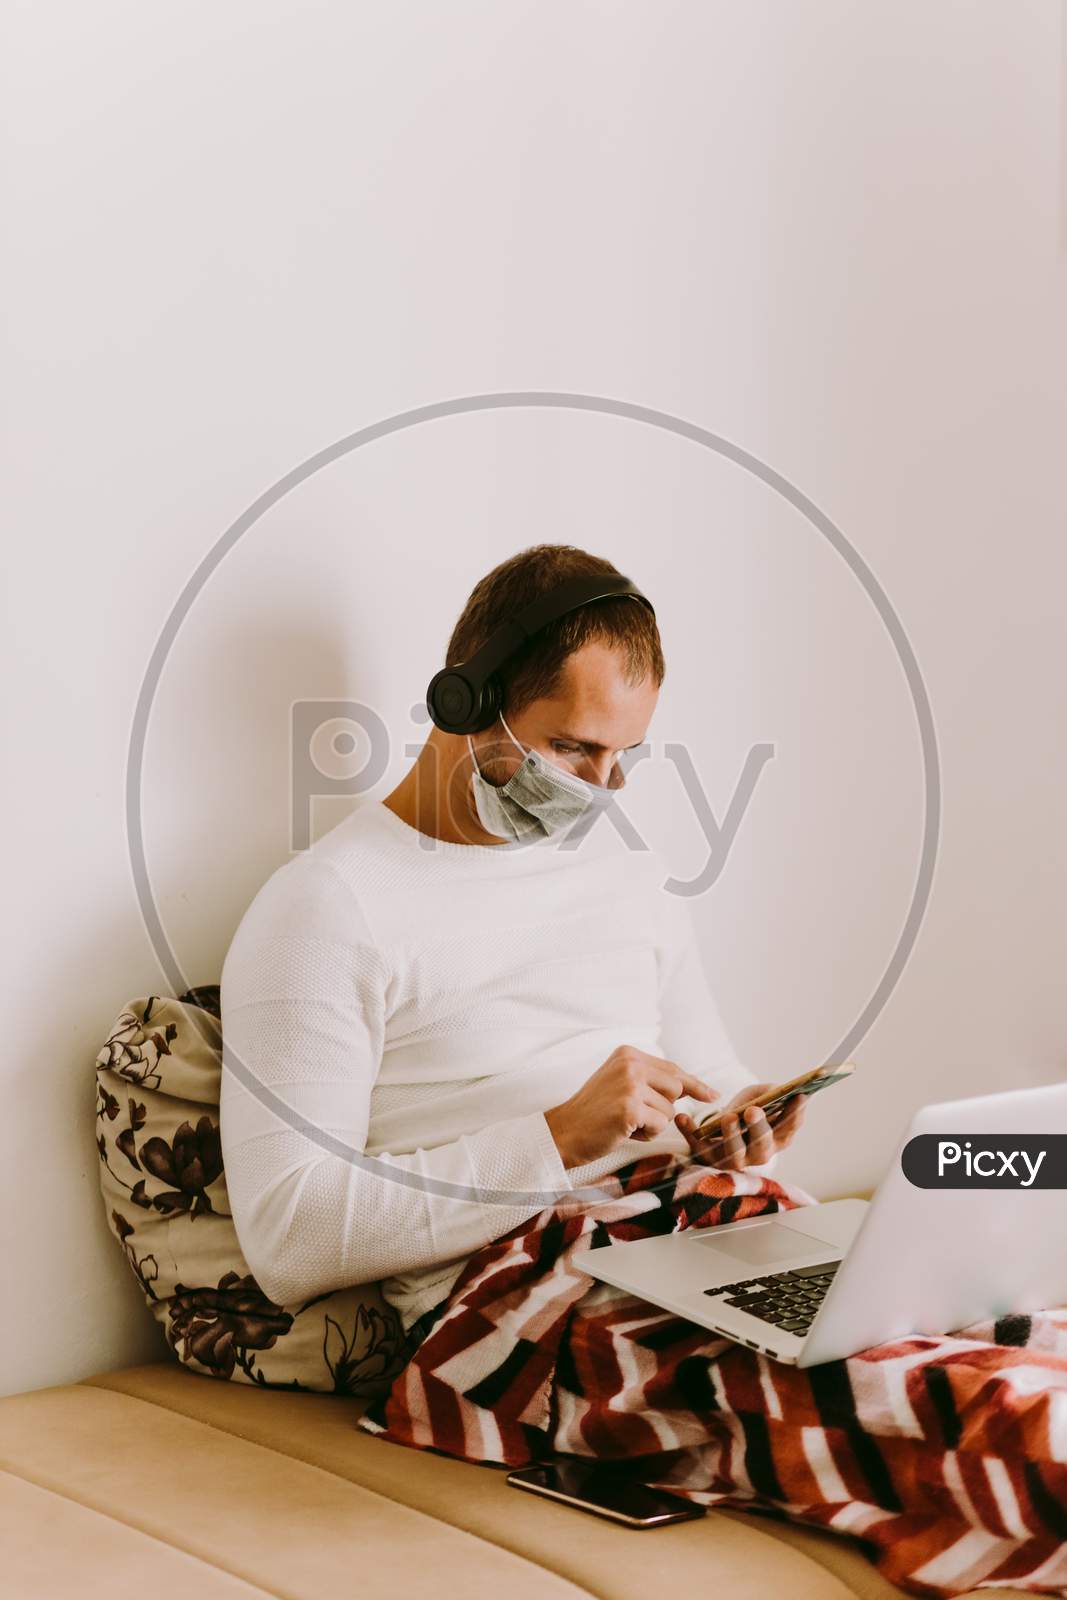 Man Using Laptop At Home During Quarantine At Home